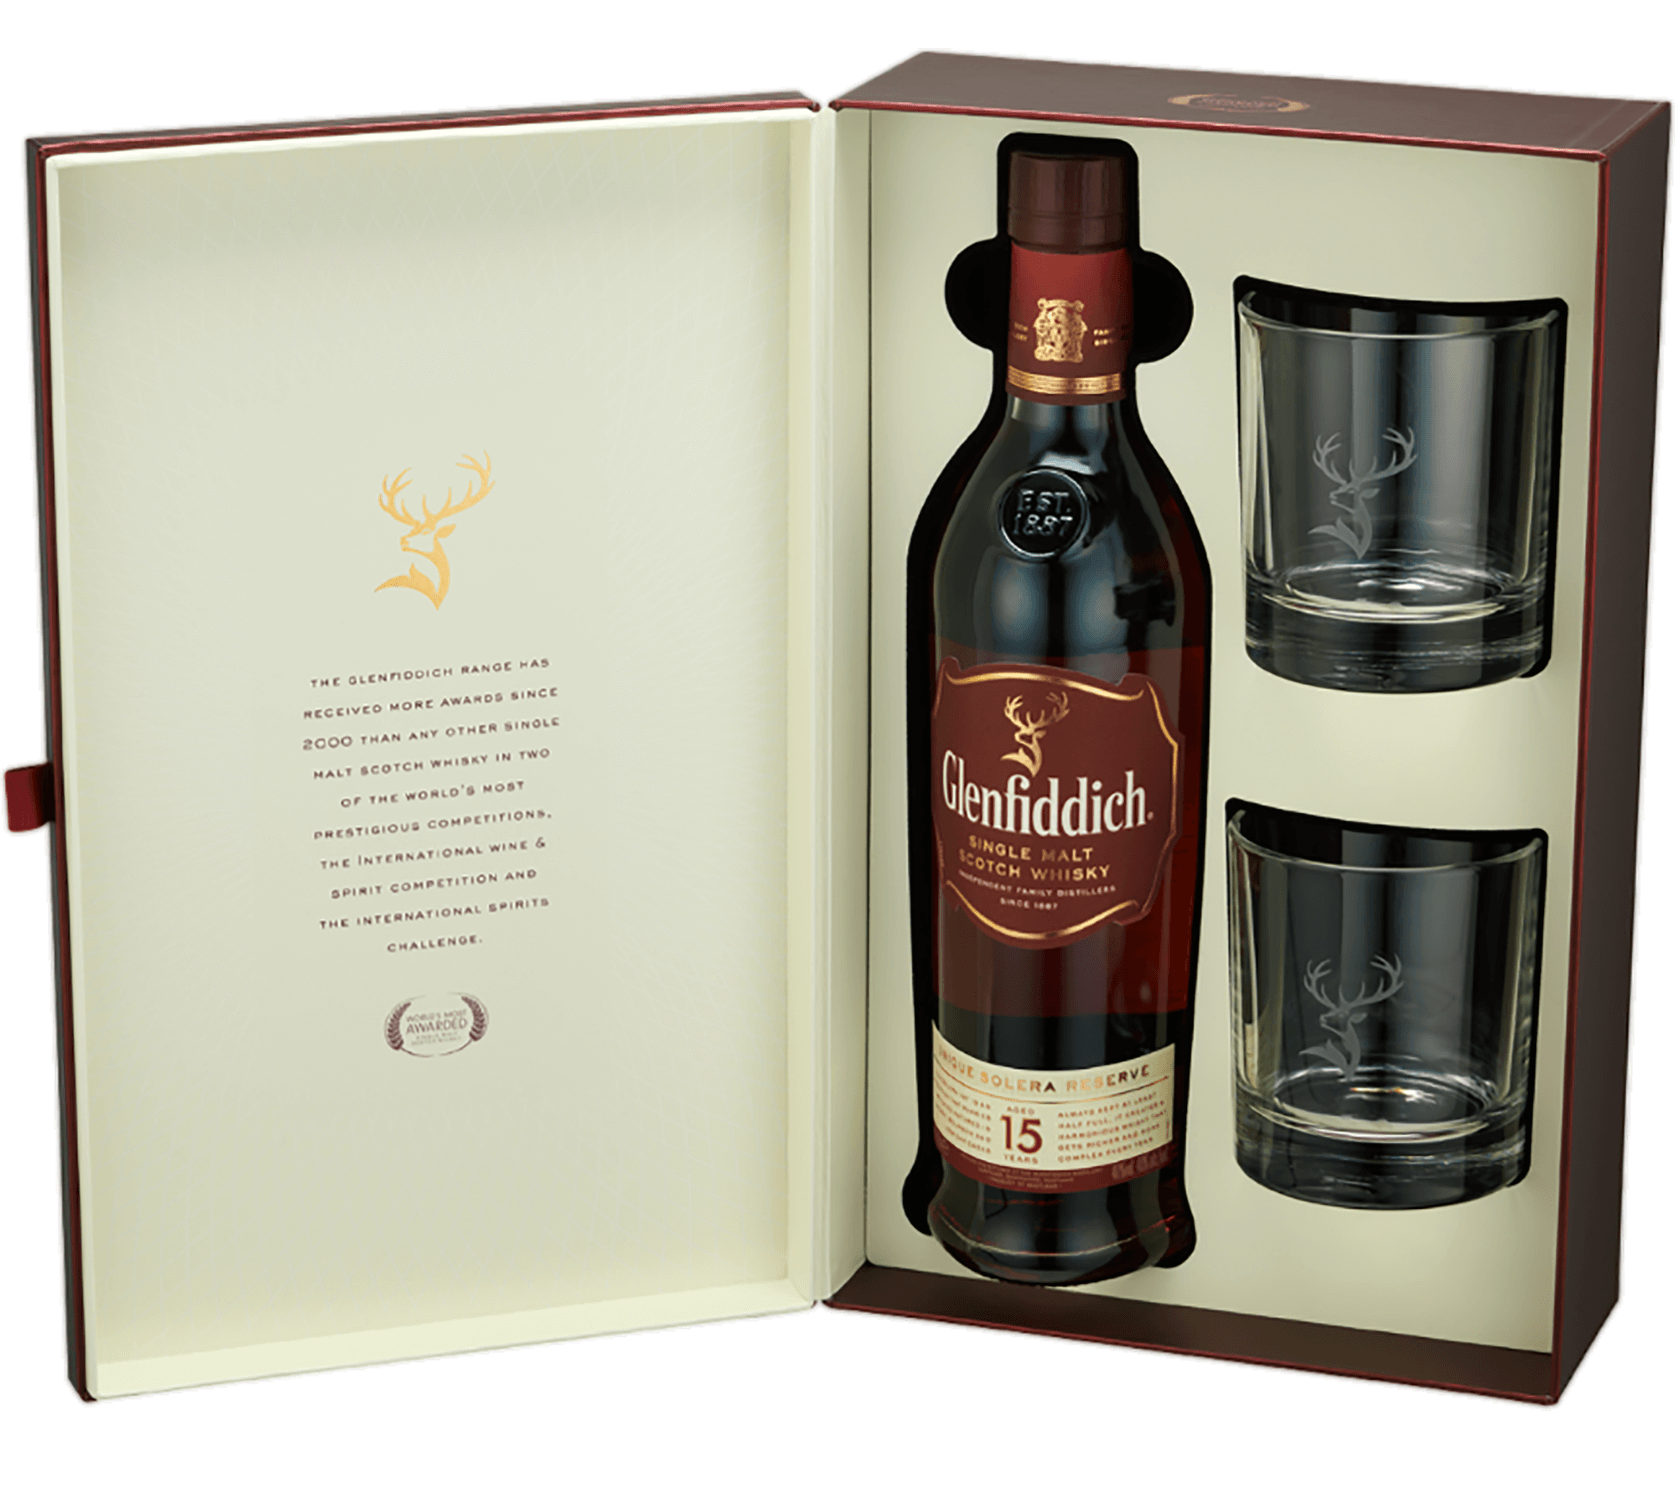 Glenfiddich 15 y.o. Single Malt Scotch Whisky (gift box with 2 glasses) glenfiddich project хх single malt scotch whisky gift box